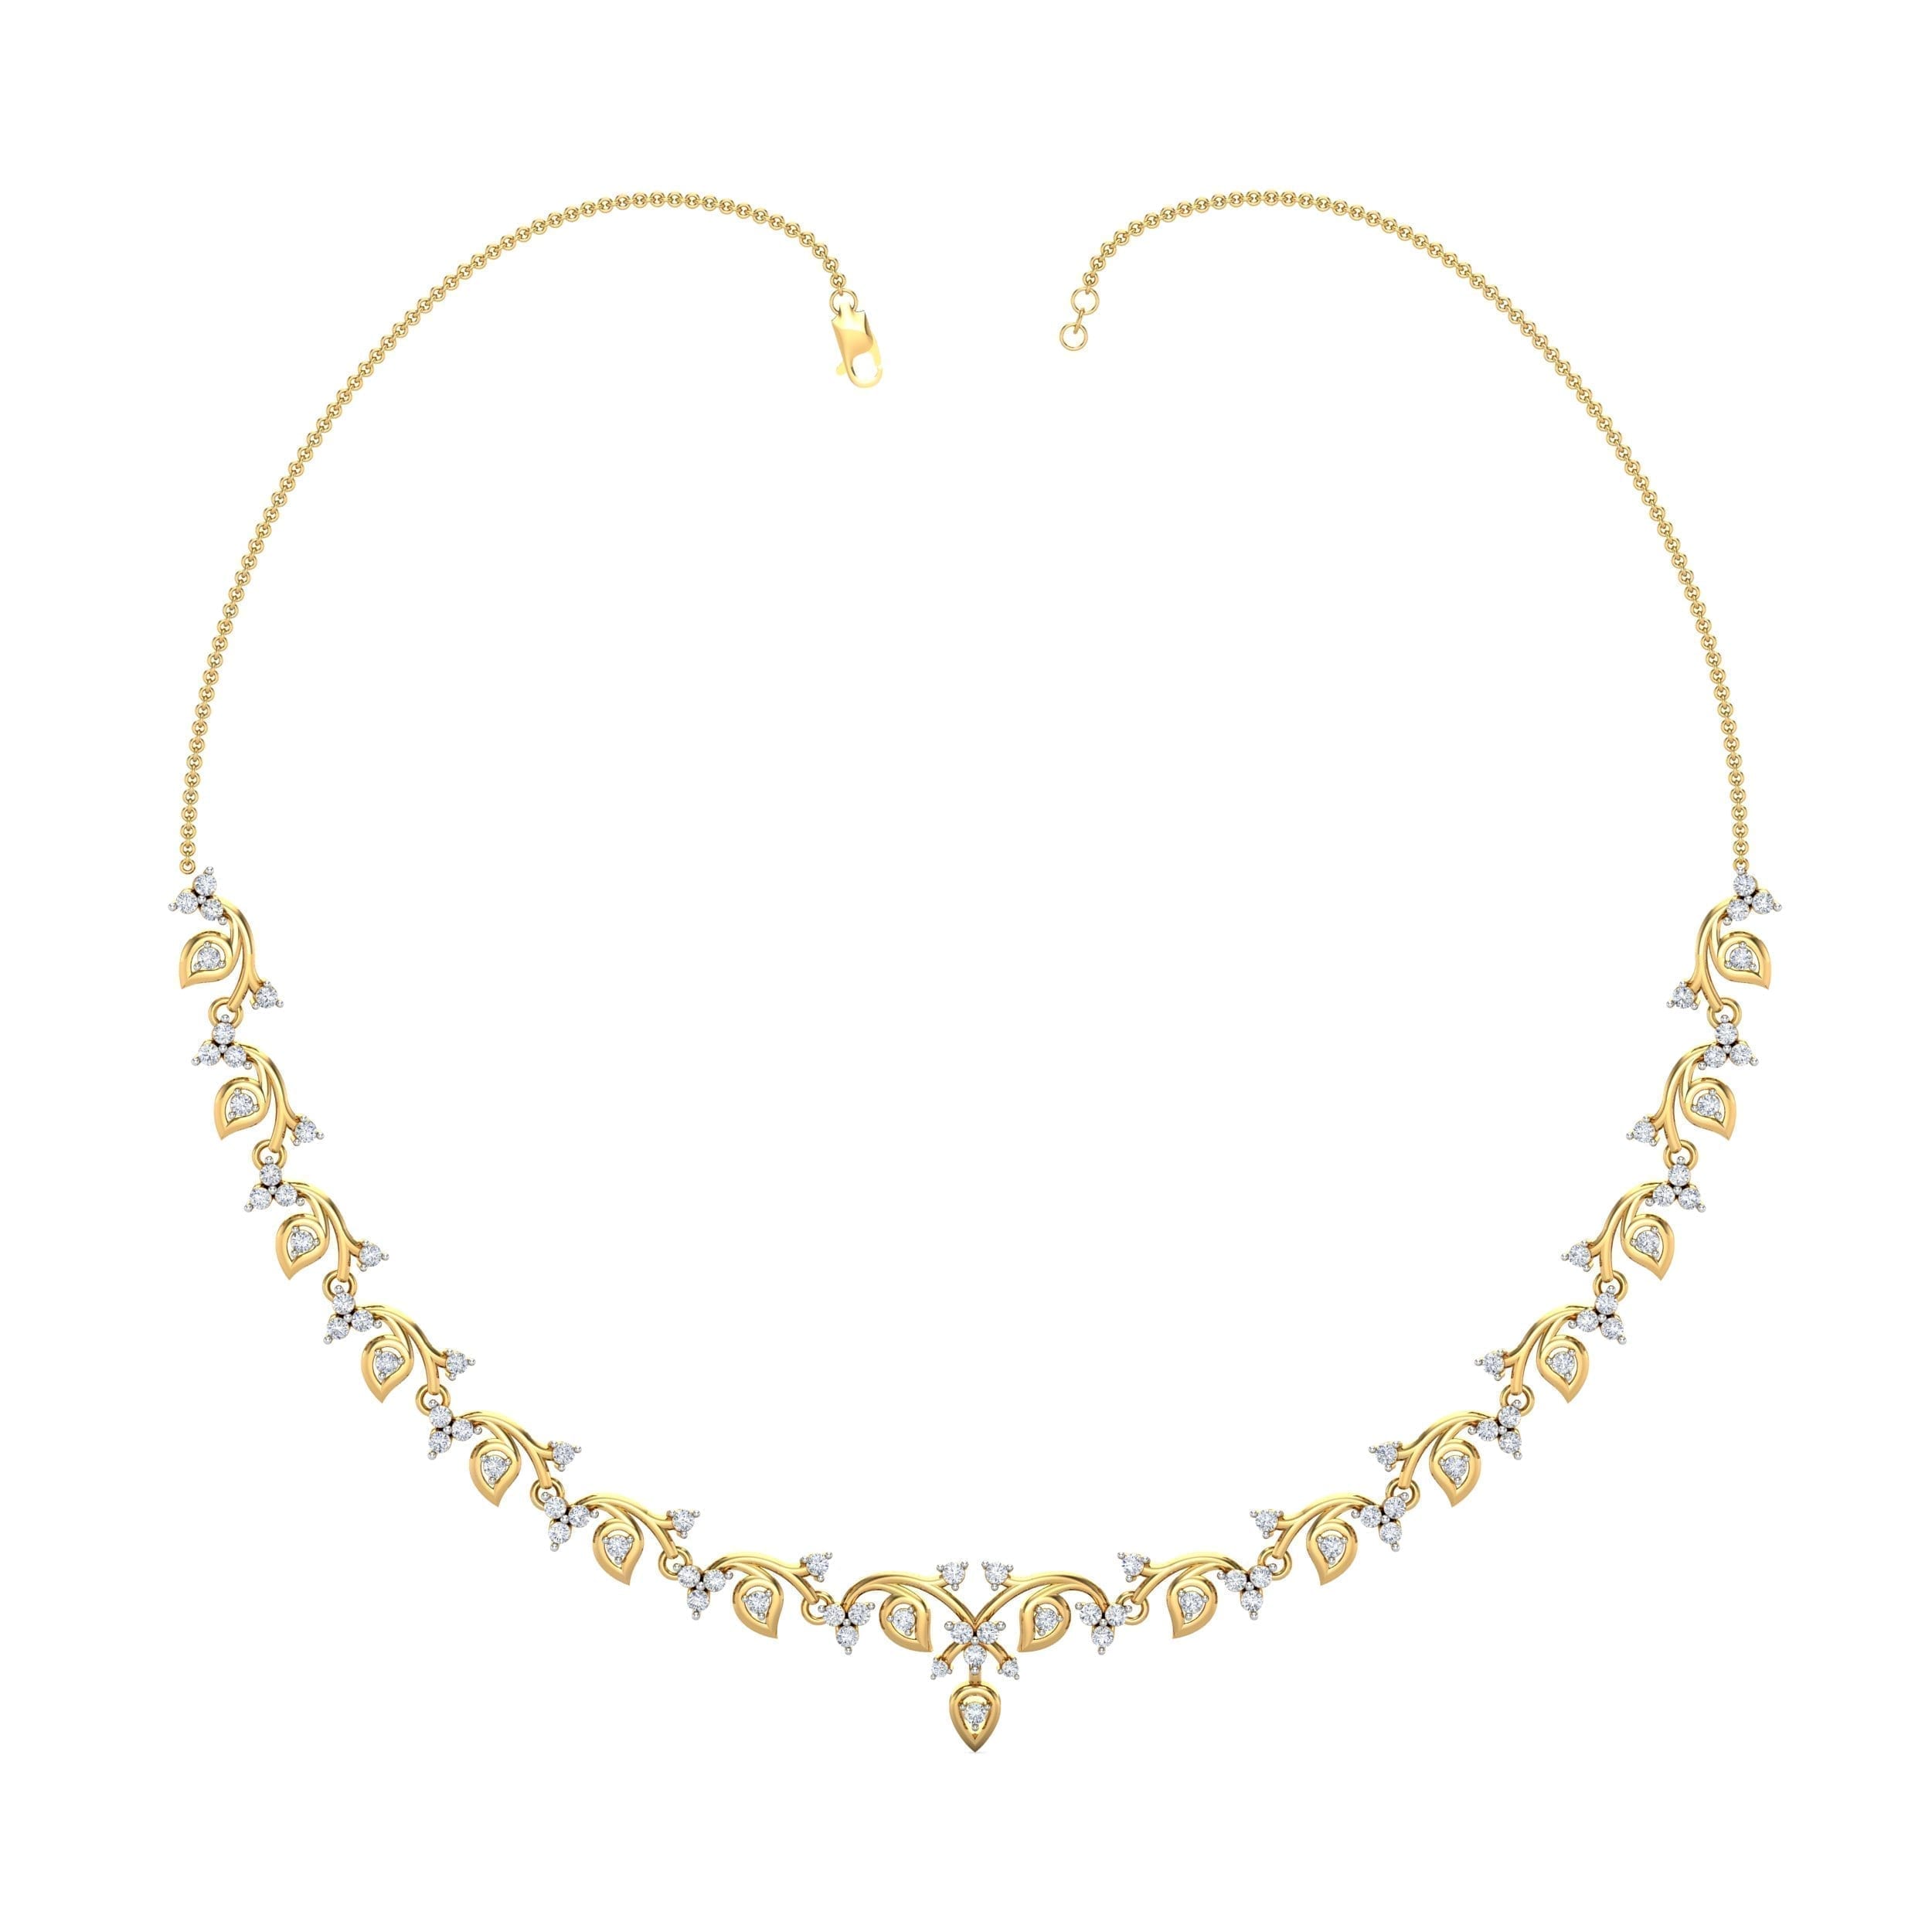 GIA 2.07ct Estate Vintage Heart Diamond Pendant Necklace in 18k Yellow Gold